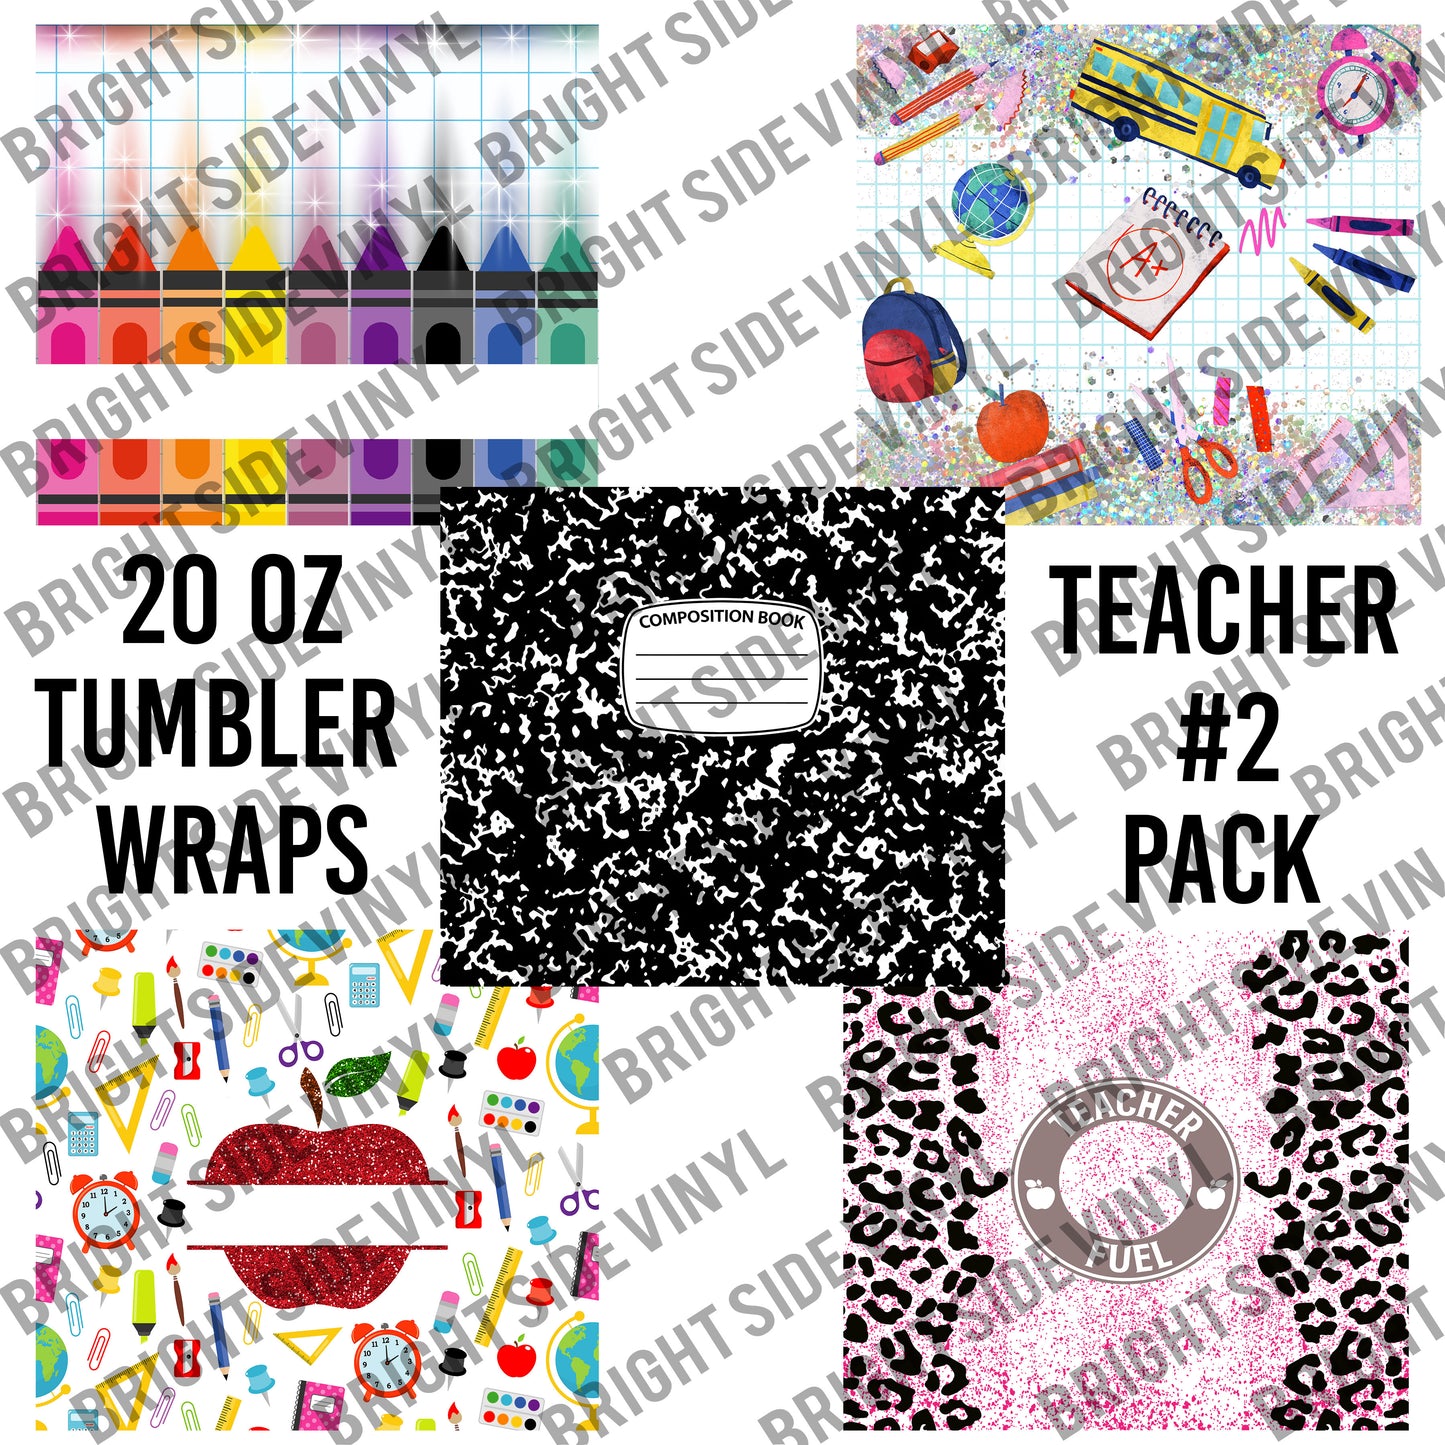 Teacher #2 Tumbler Wrap Pack